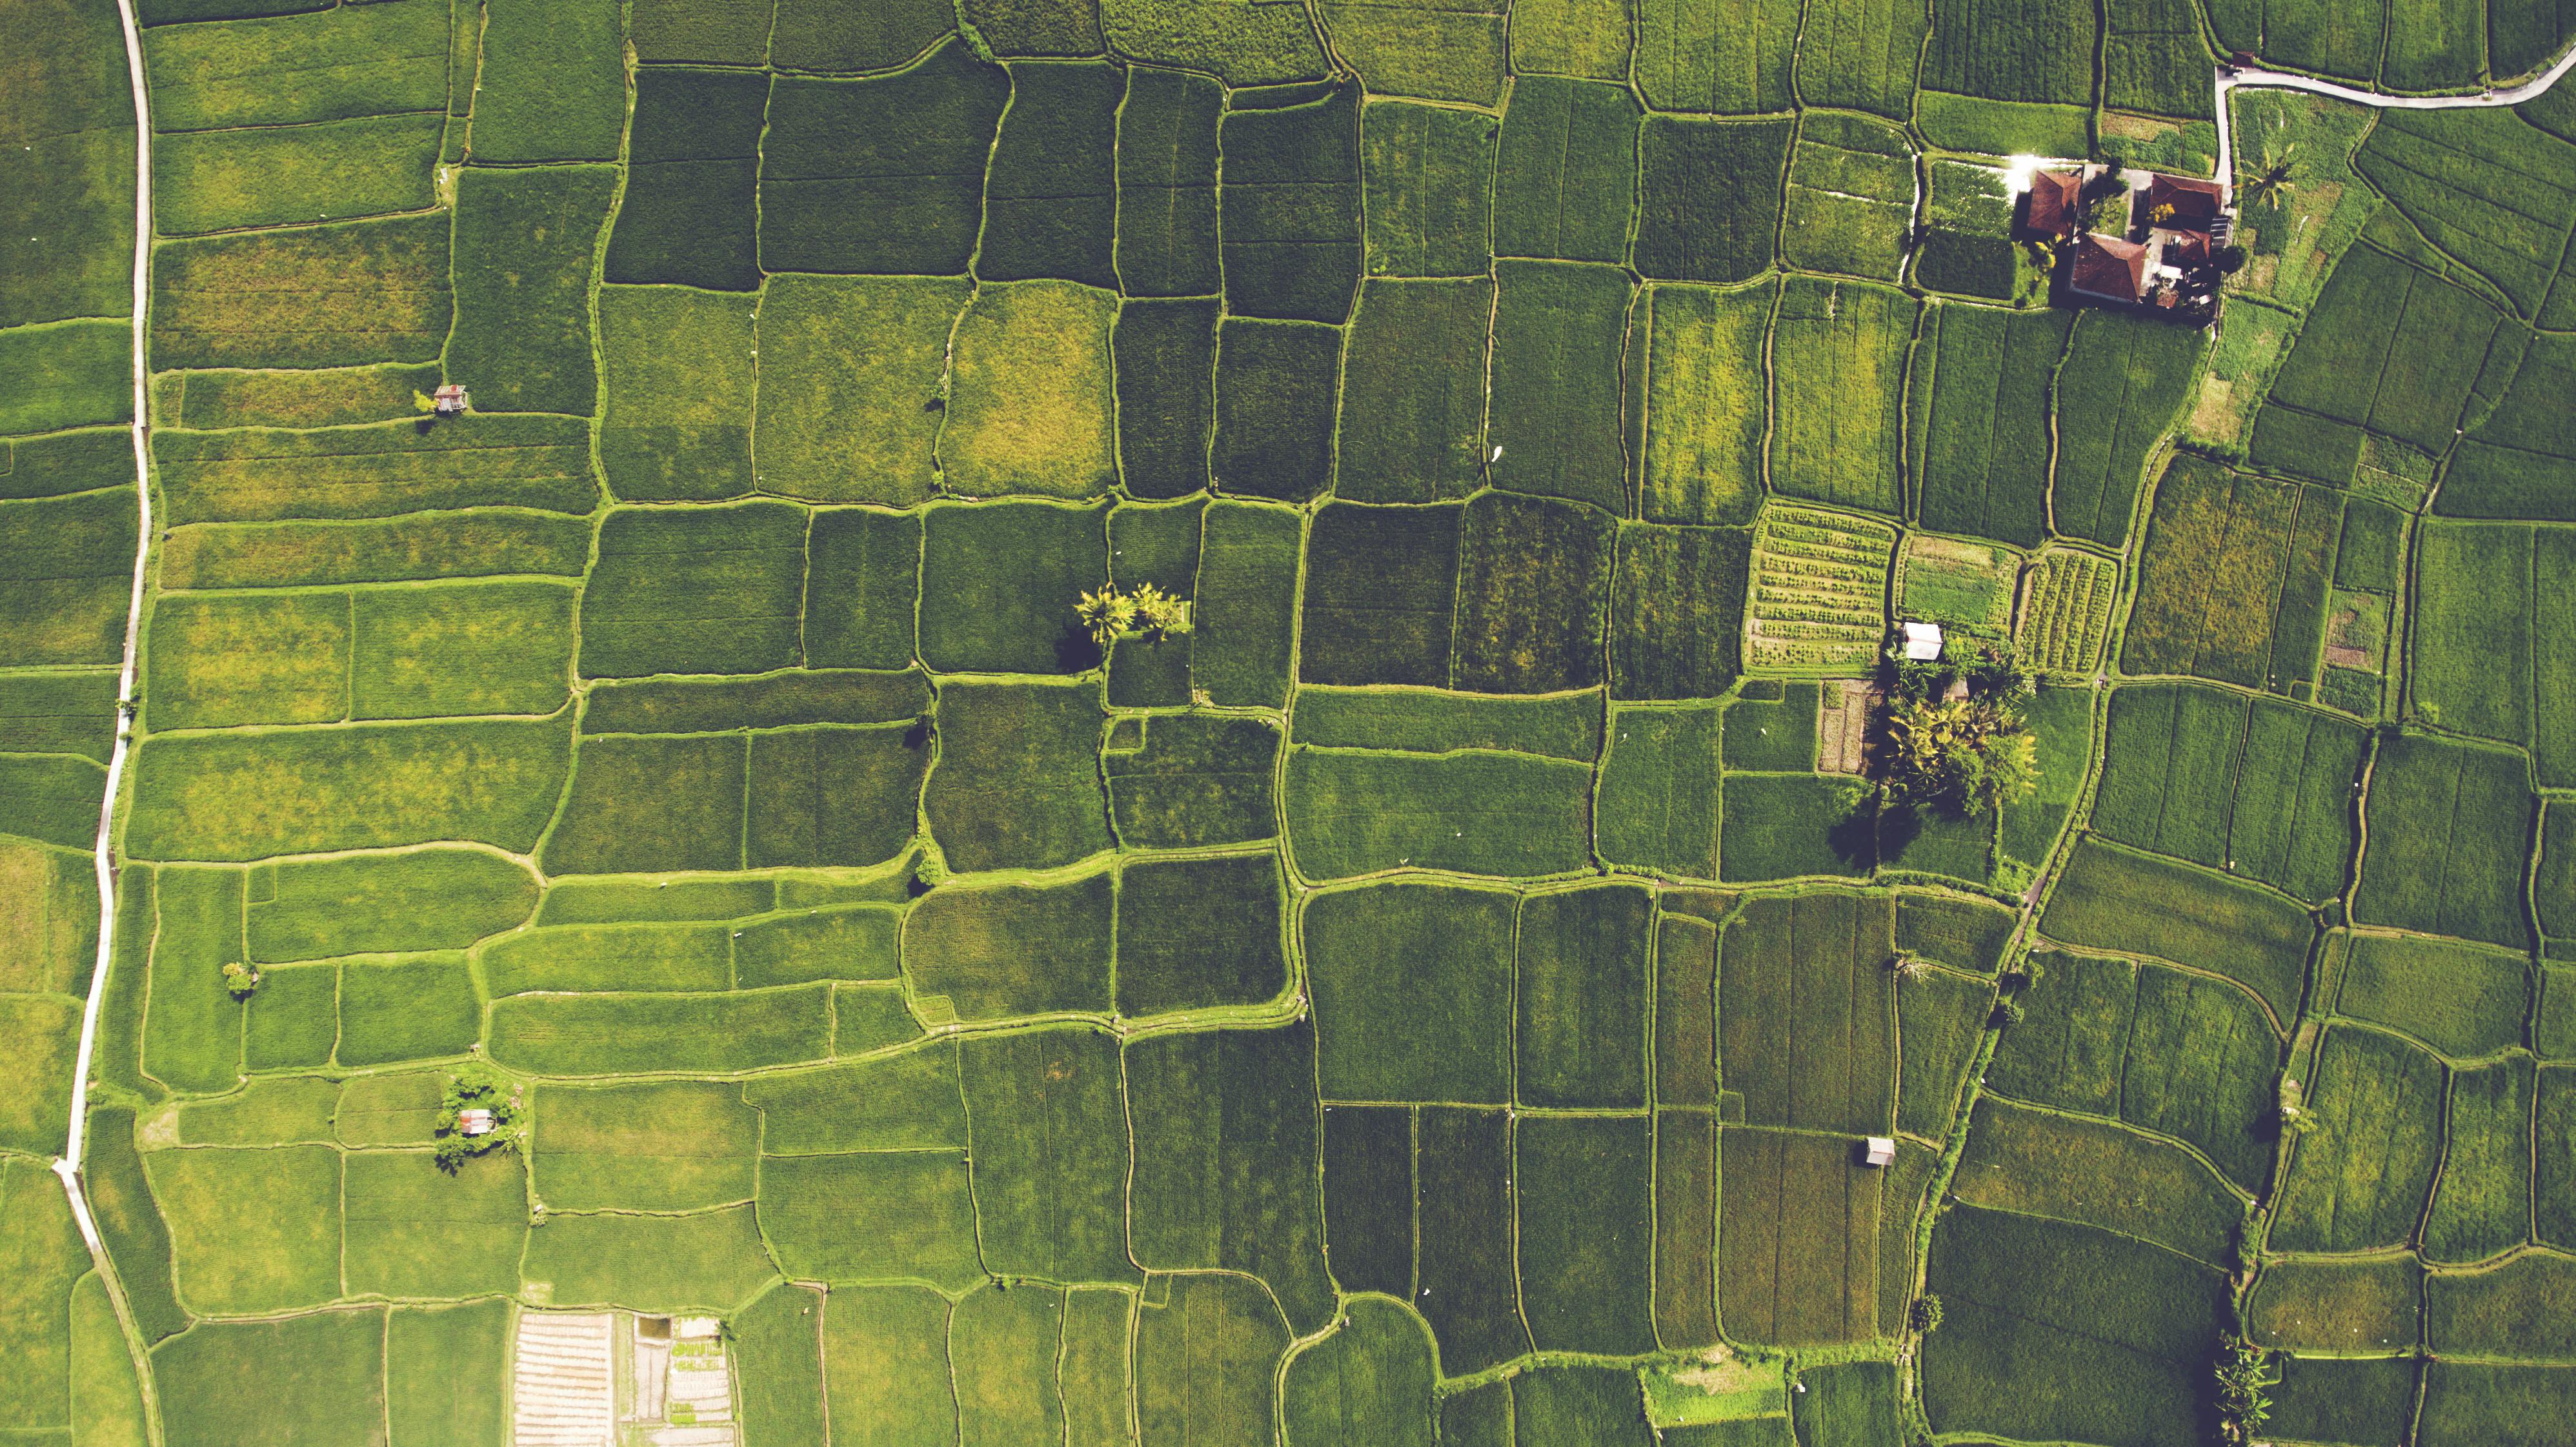 Drone shot of rice paddies